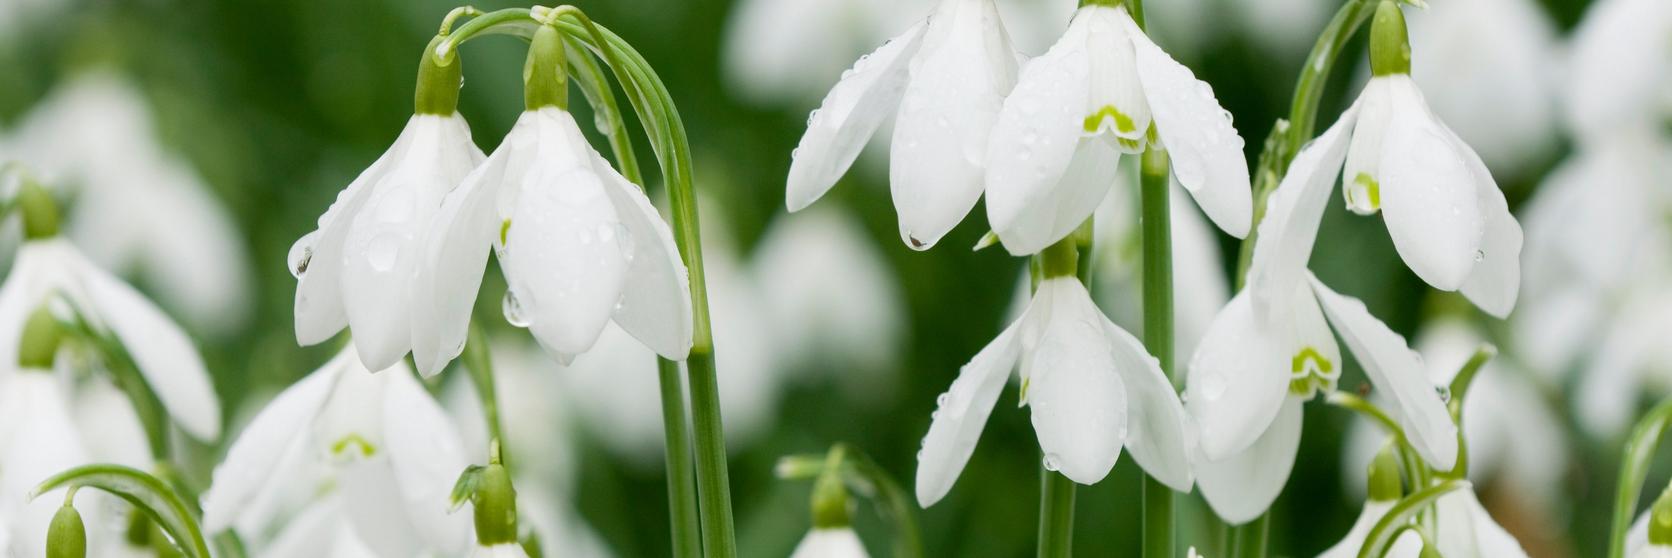 snowdrops-white-flowers